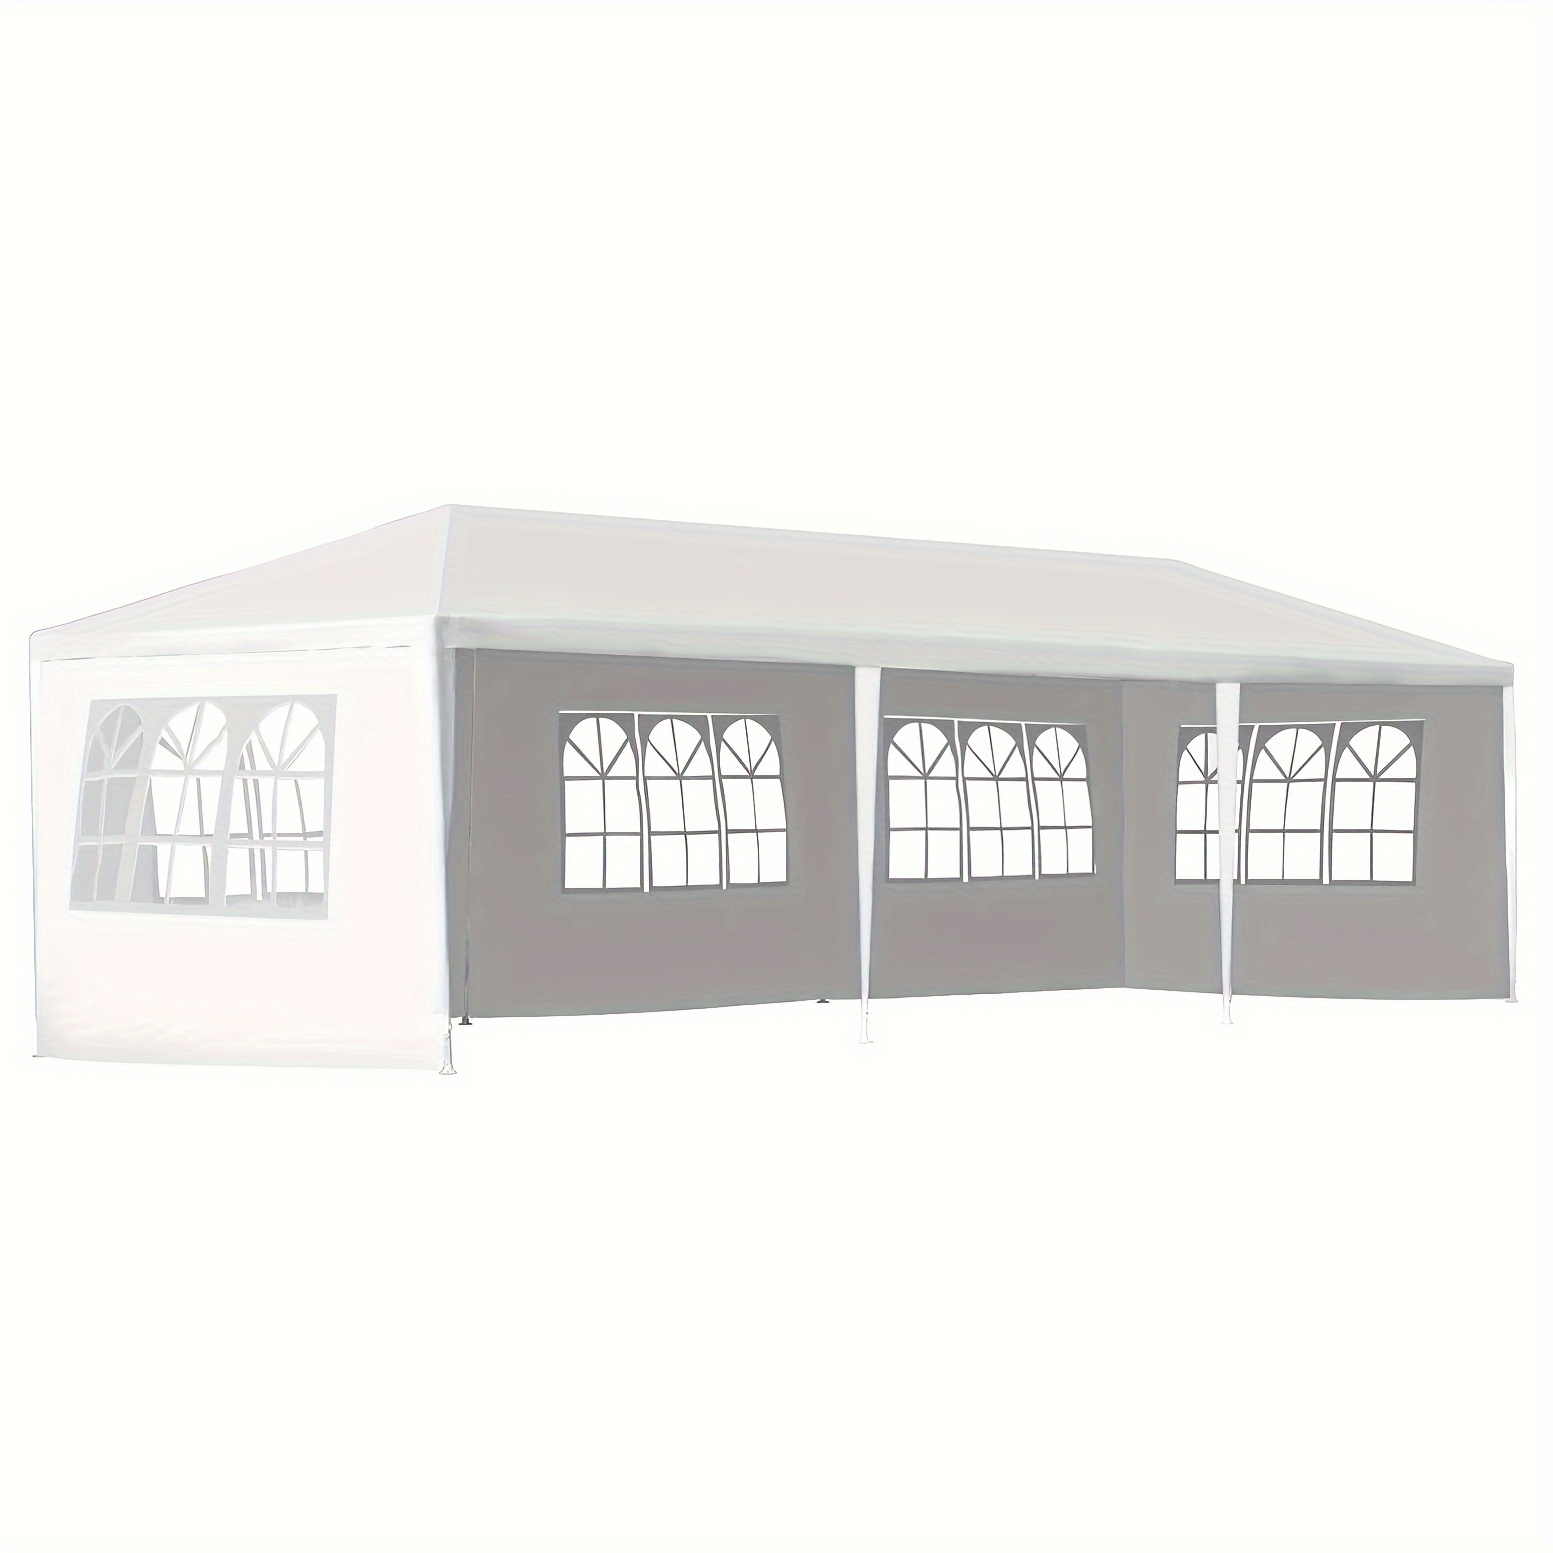 

1set 10ft *30ft Canopy Tent Outdoor Gazebo Canopy Wedding Party Tent, Heavy Duty Gazebo Pavilion, White (10x30ft 5 Removable Sidewalls)